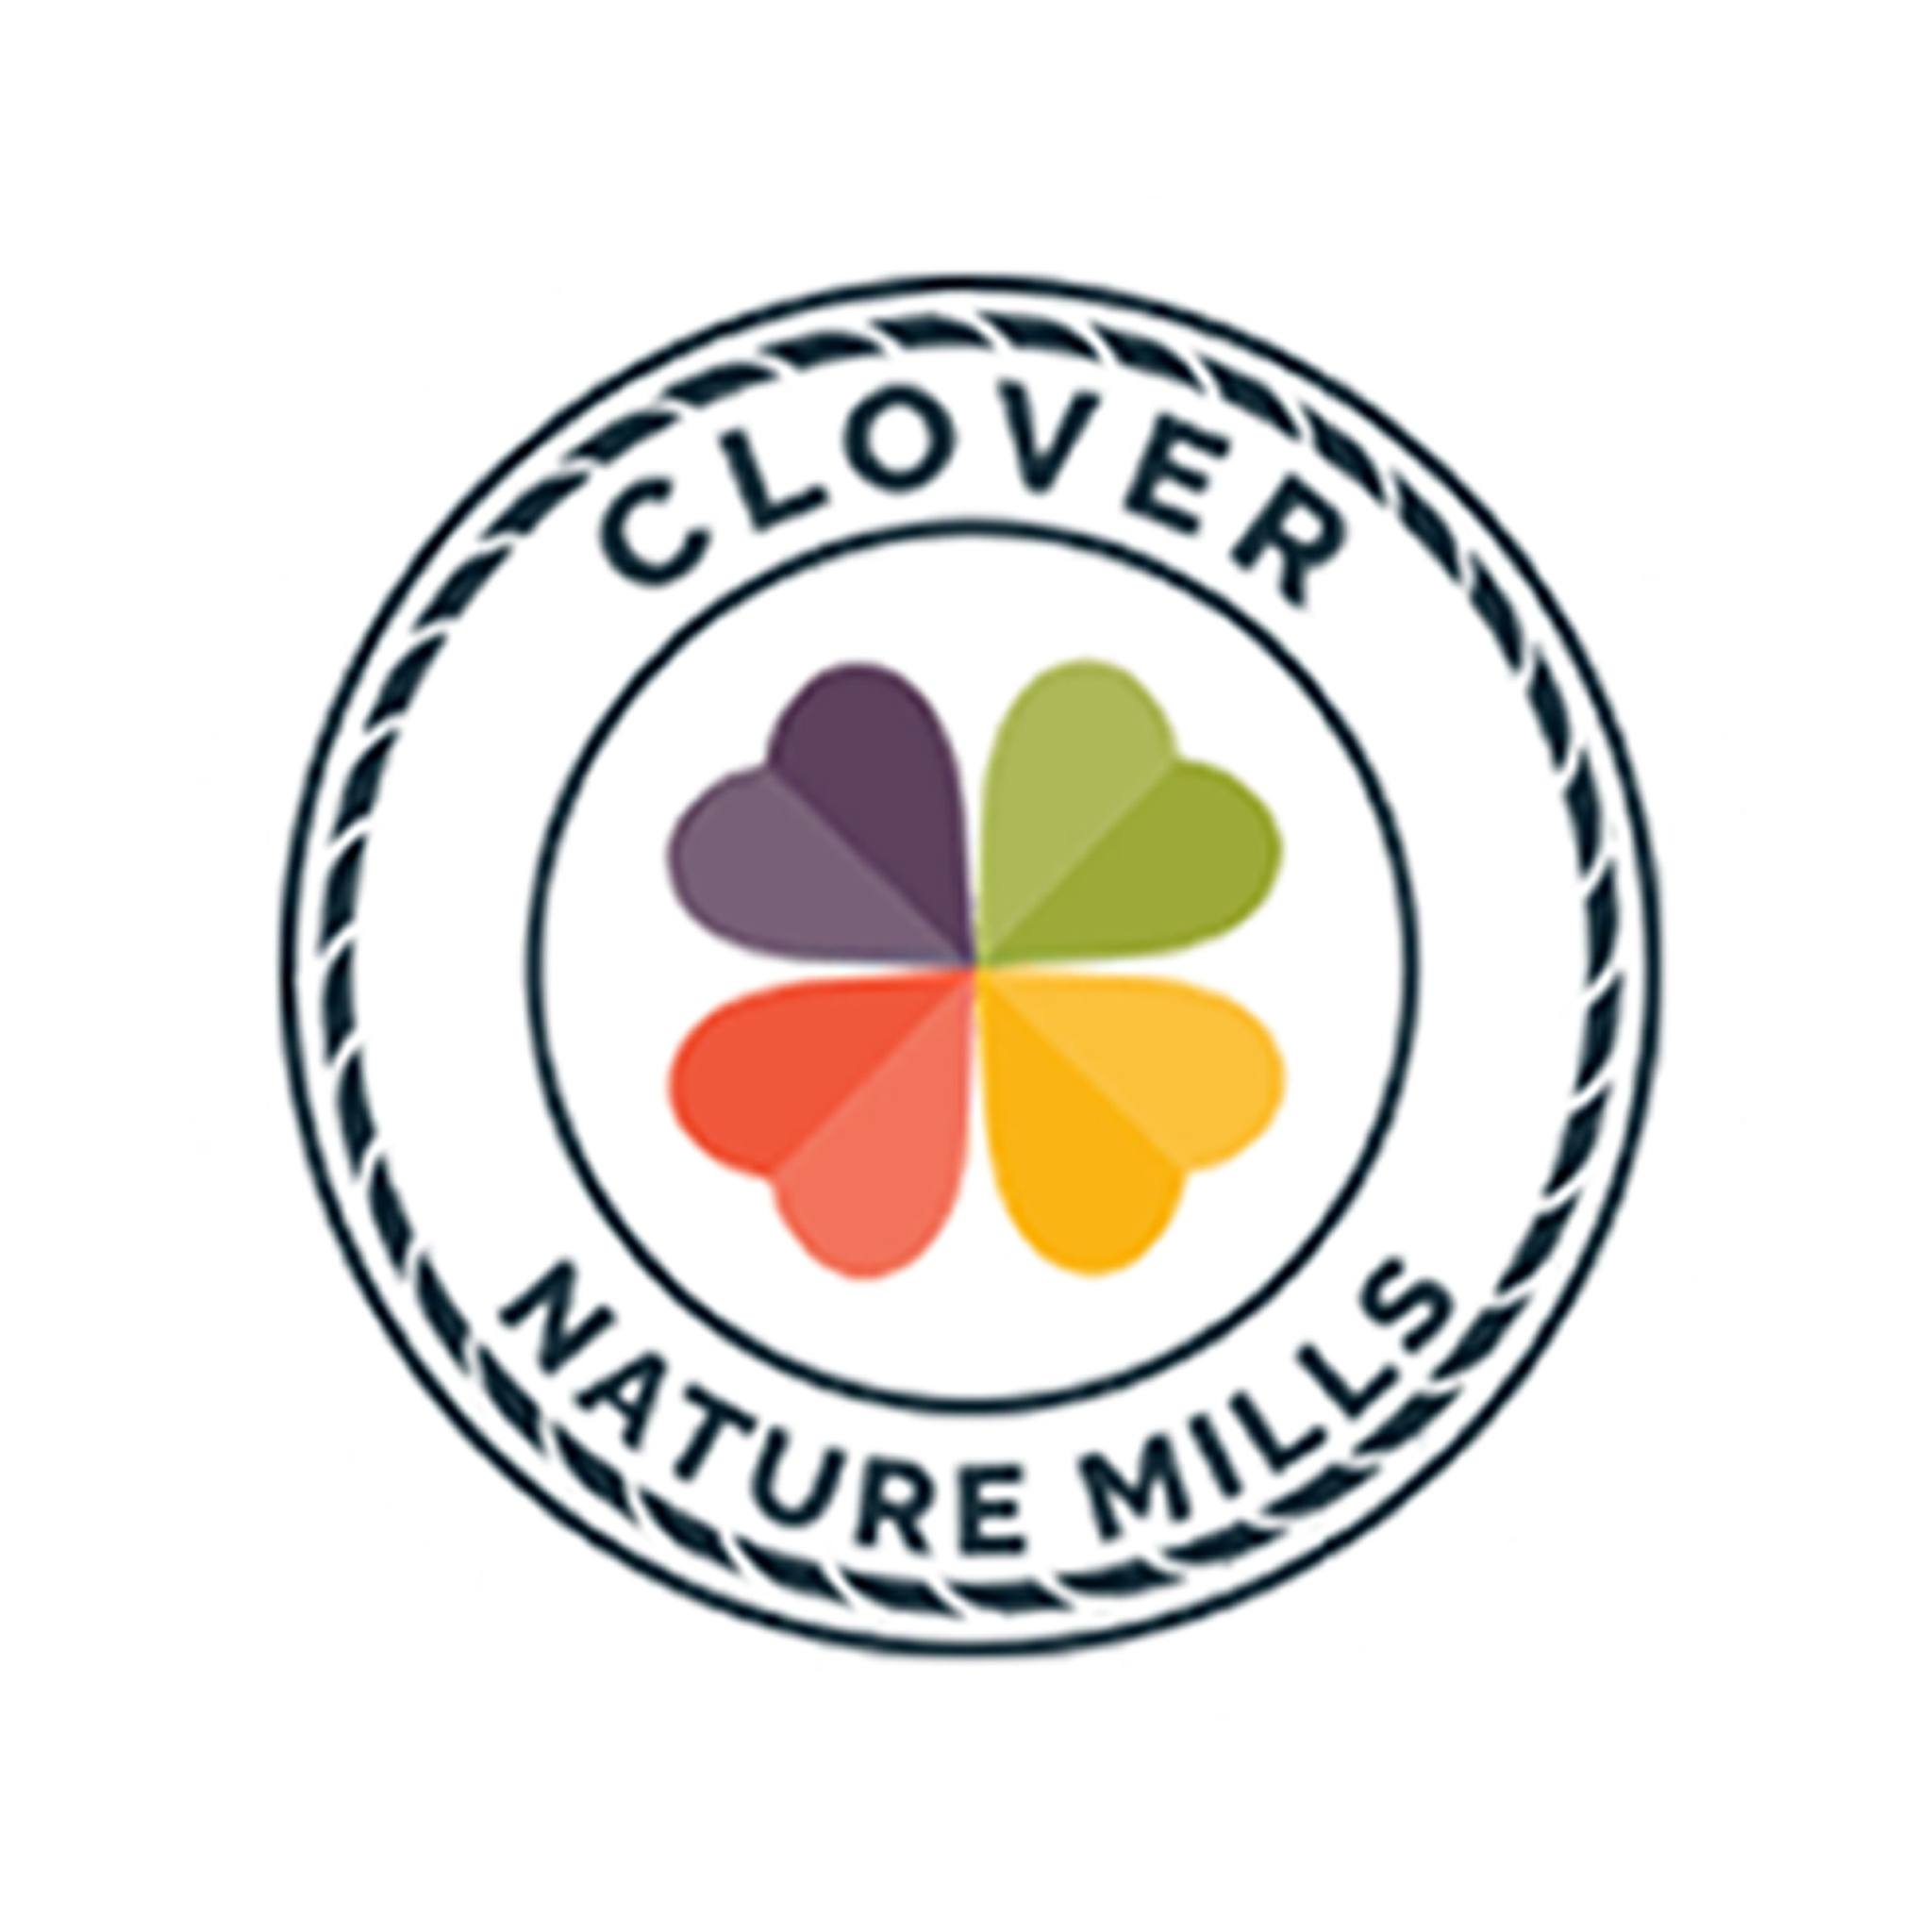 Clover Nature Mills